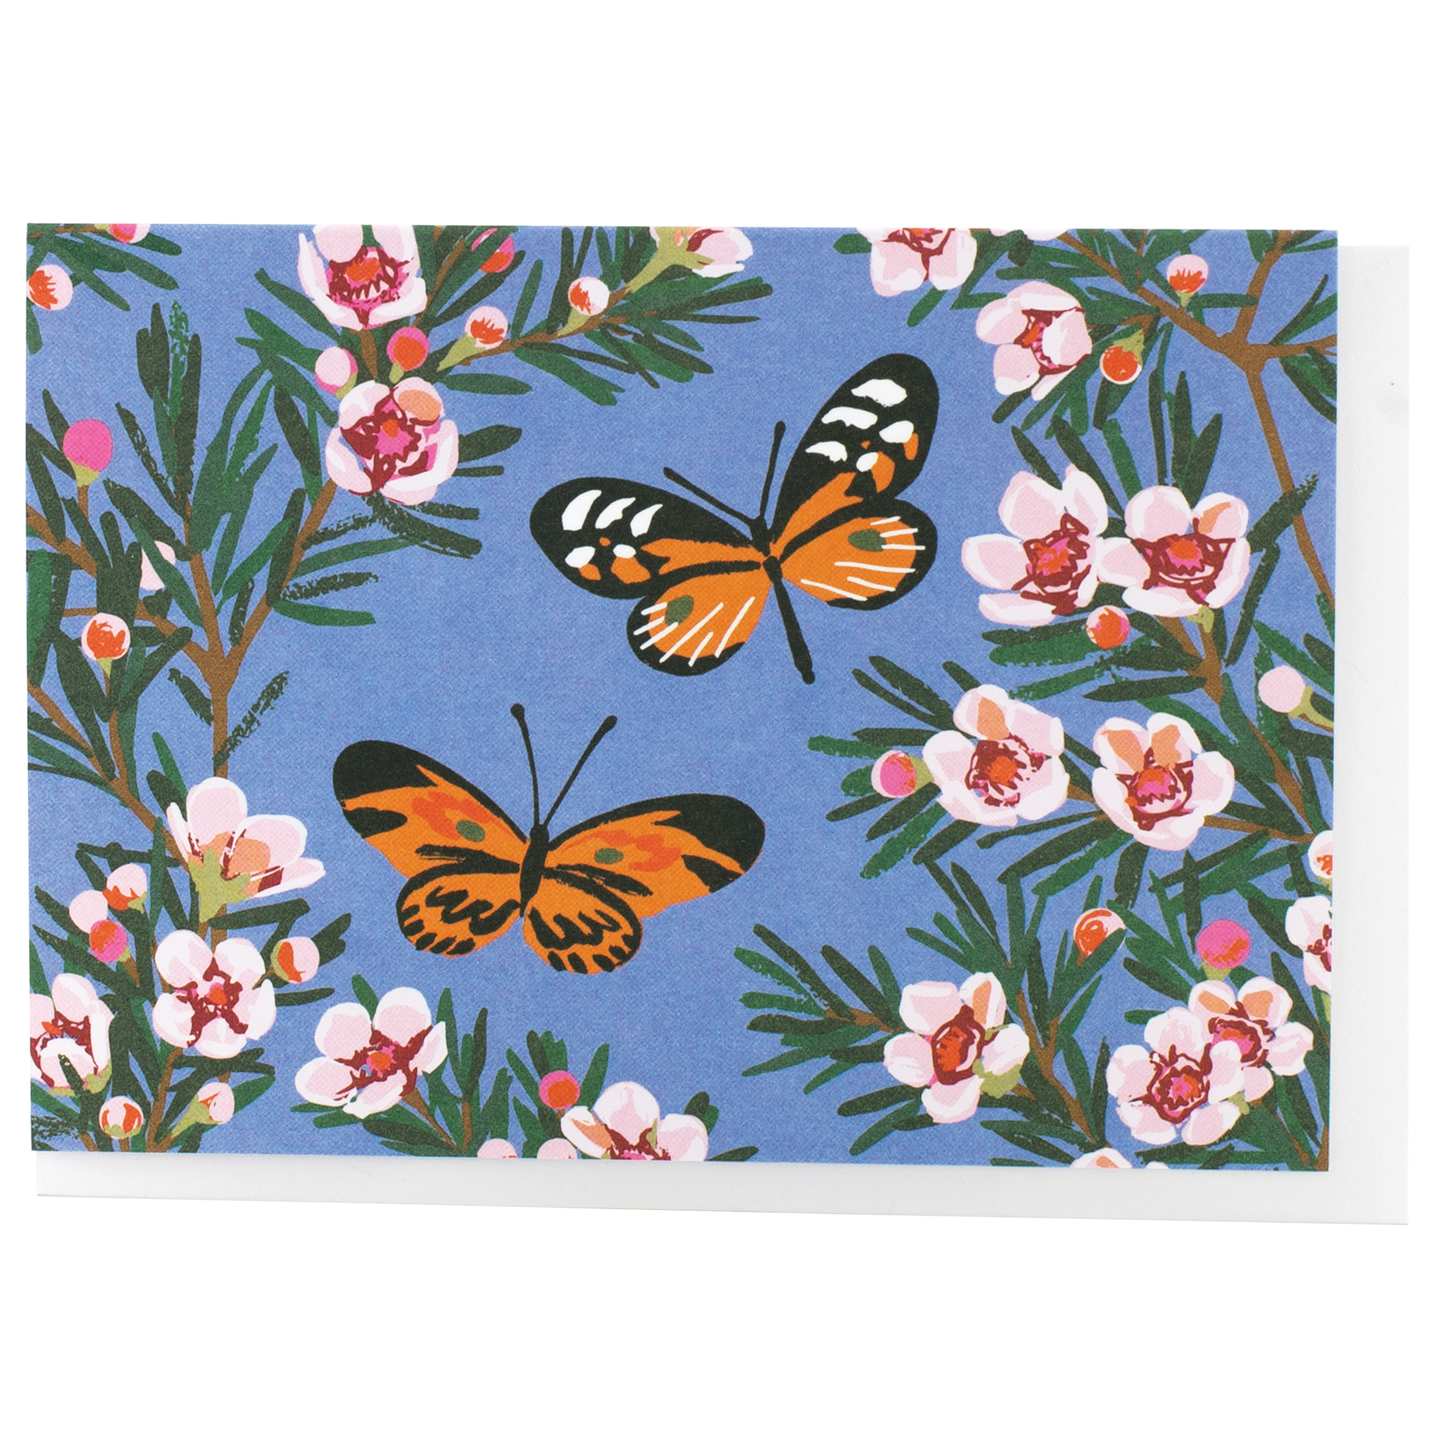 Wax Flowers & Butterflies Note Card